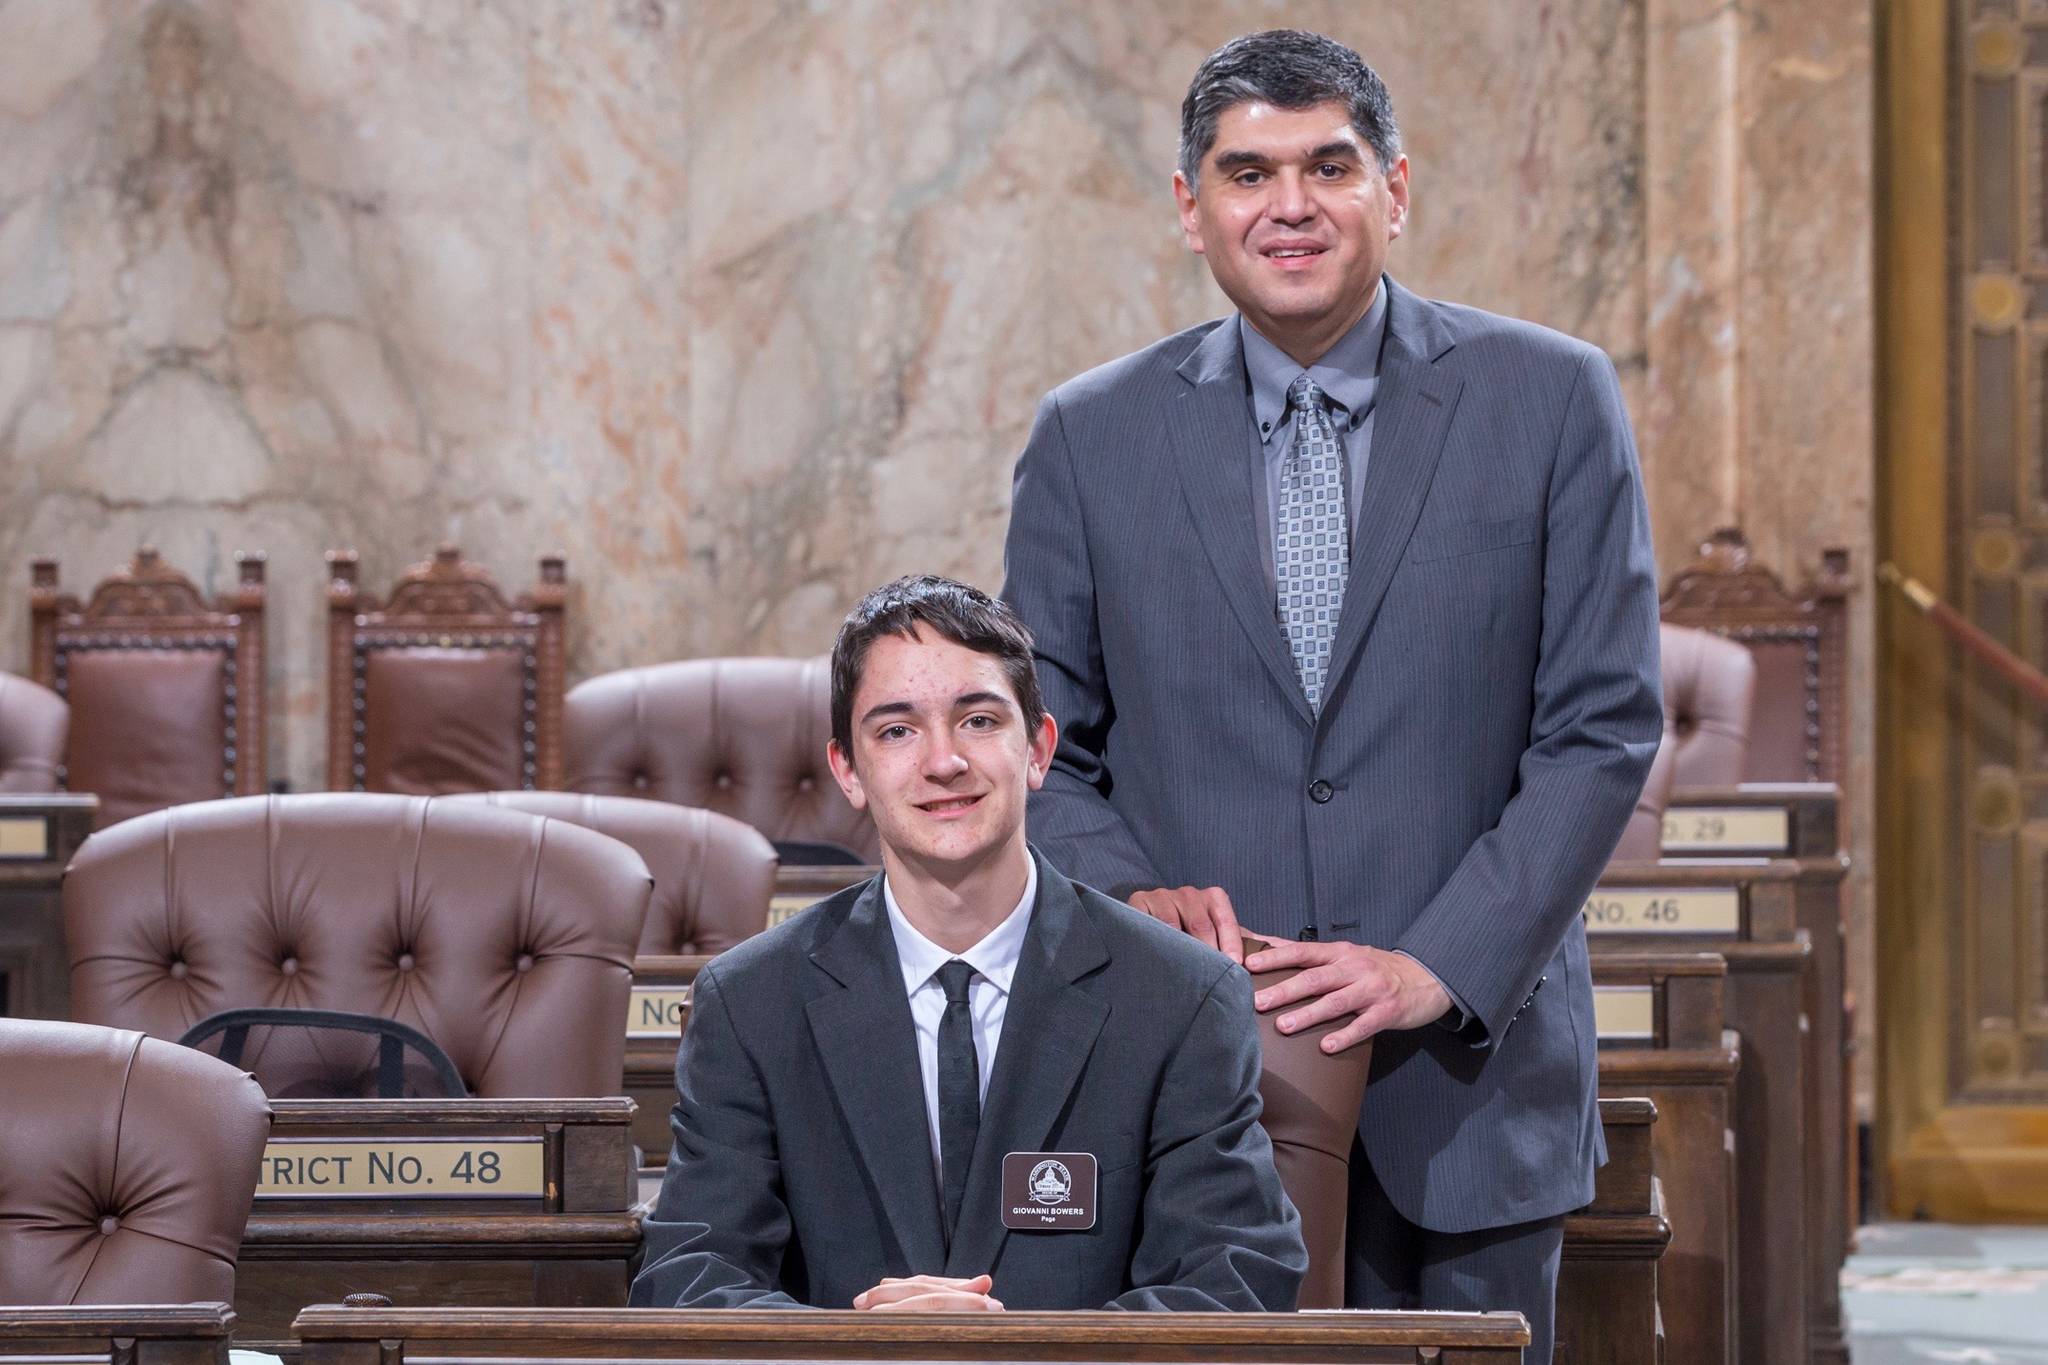 Giovanni Bowers, with state Rep. Javier Valdez. COURTESY PHOTO, Washington State Legislative Support Services)